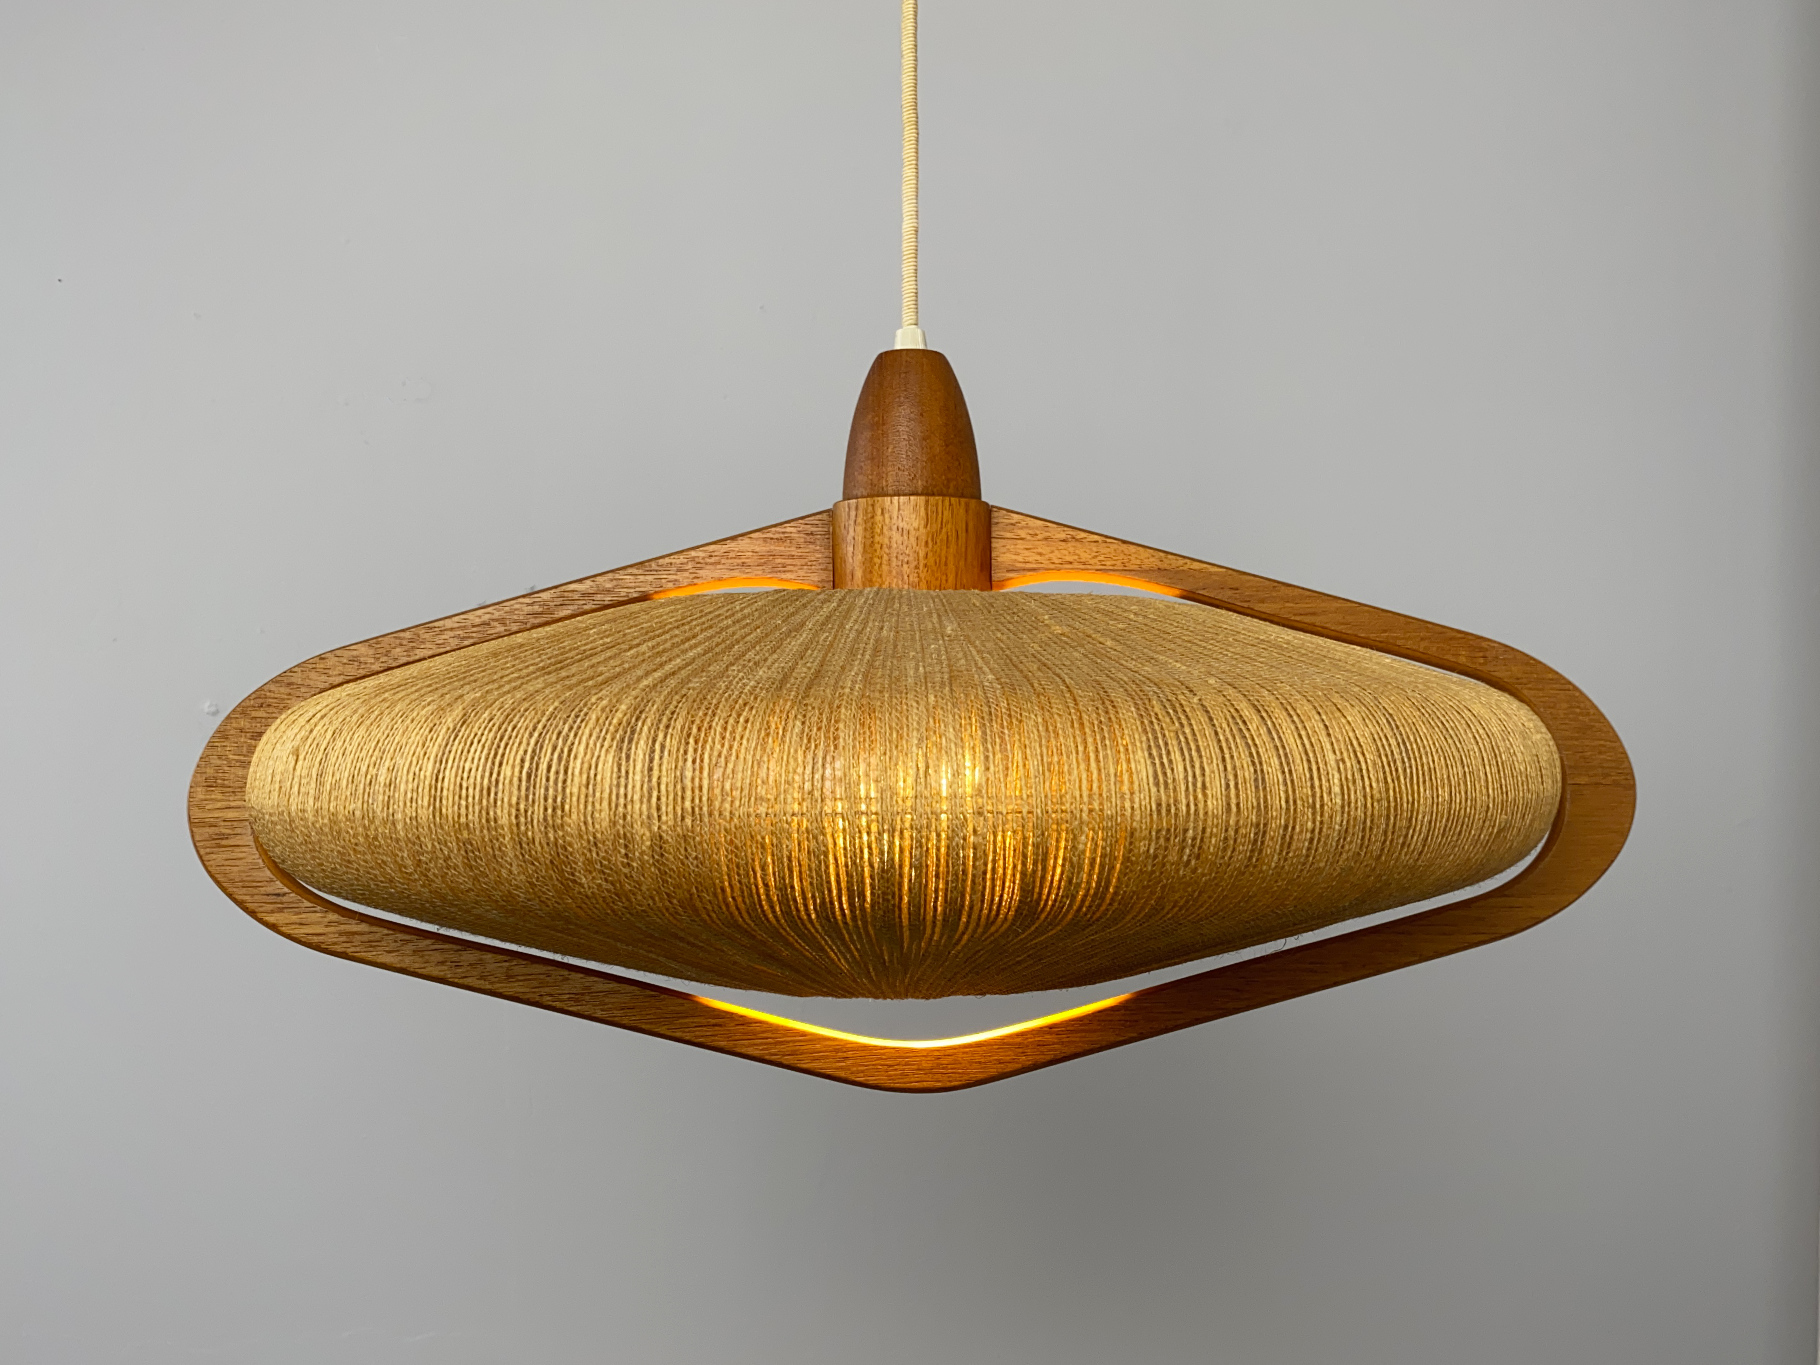 Ceiling Lamp / Pendant Lamp, Height adjustable, Teak Wood and Sisal by Temde-Leuchten, Germany, 60s